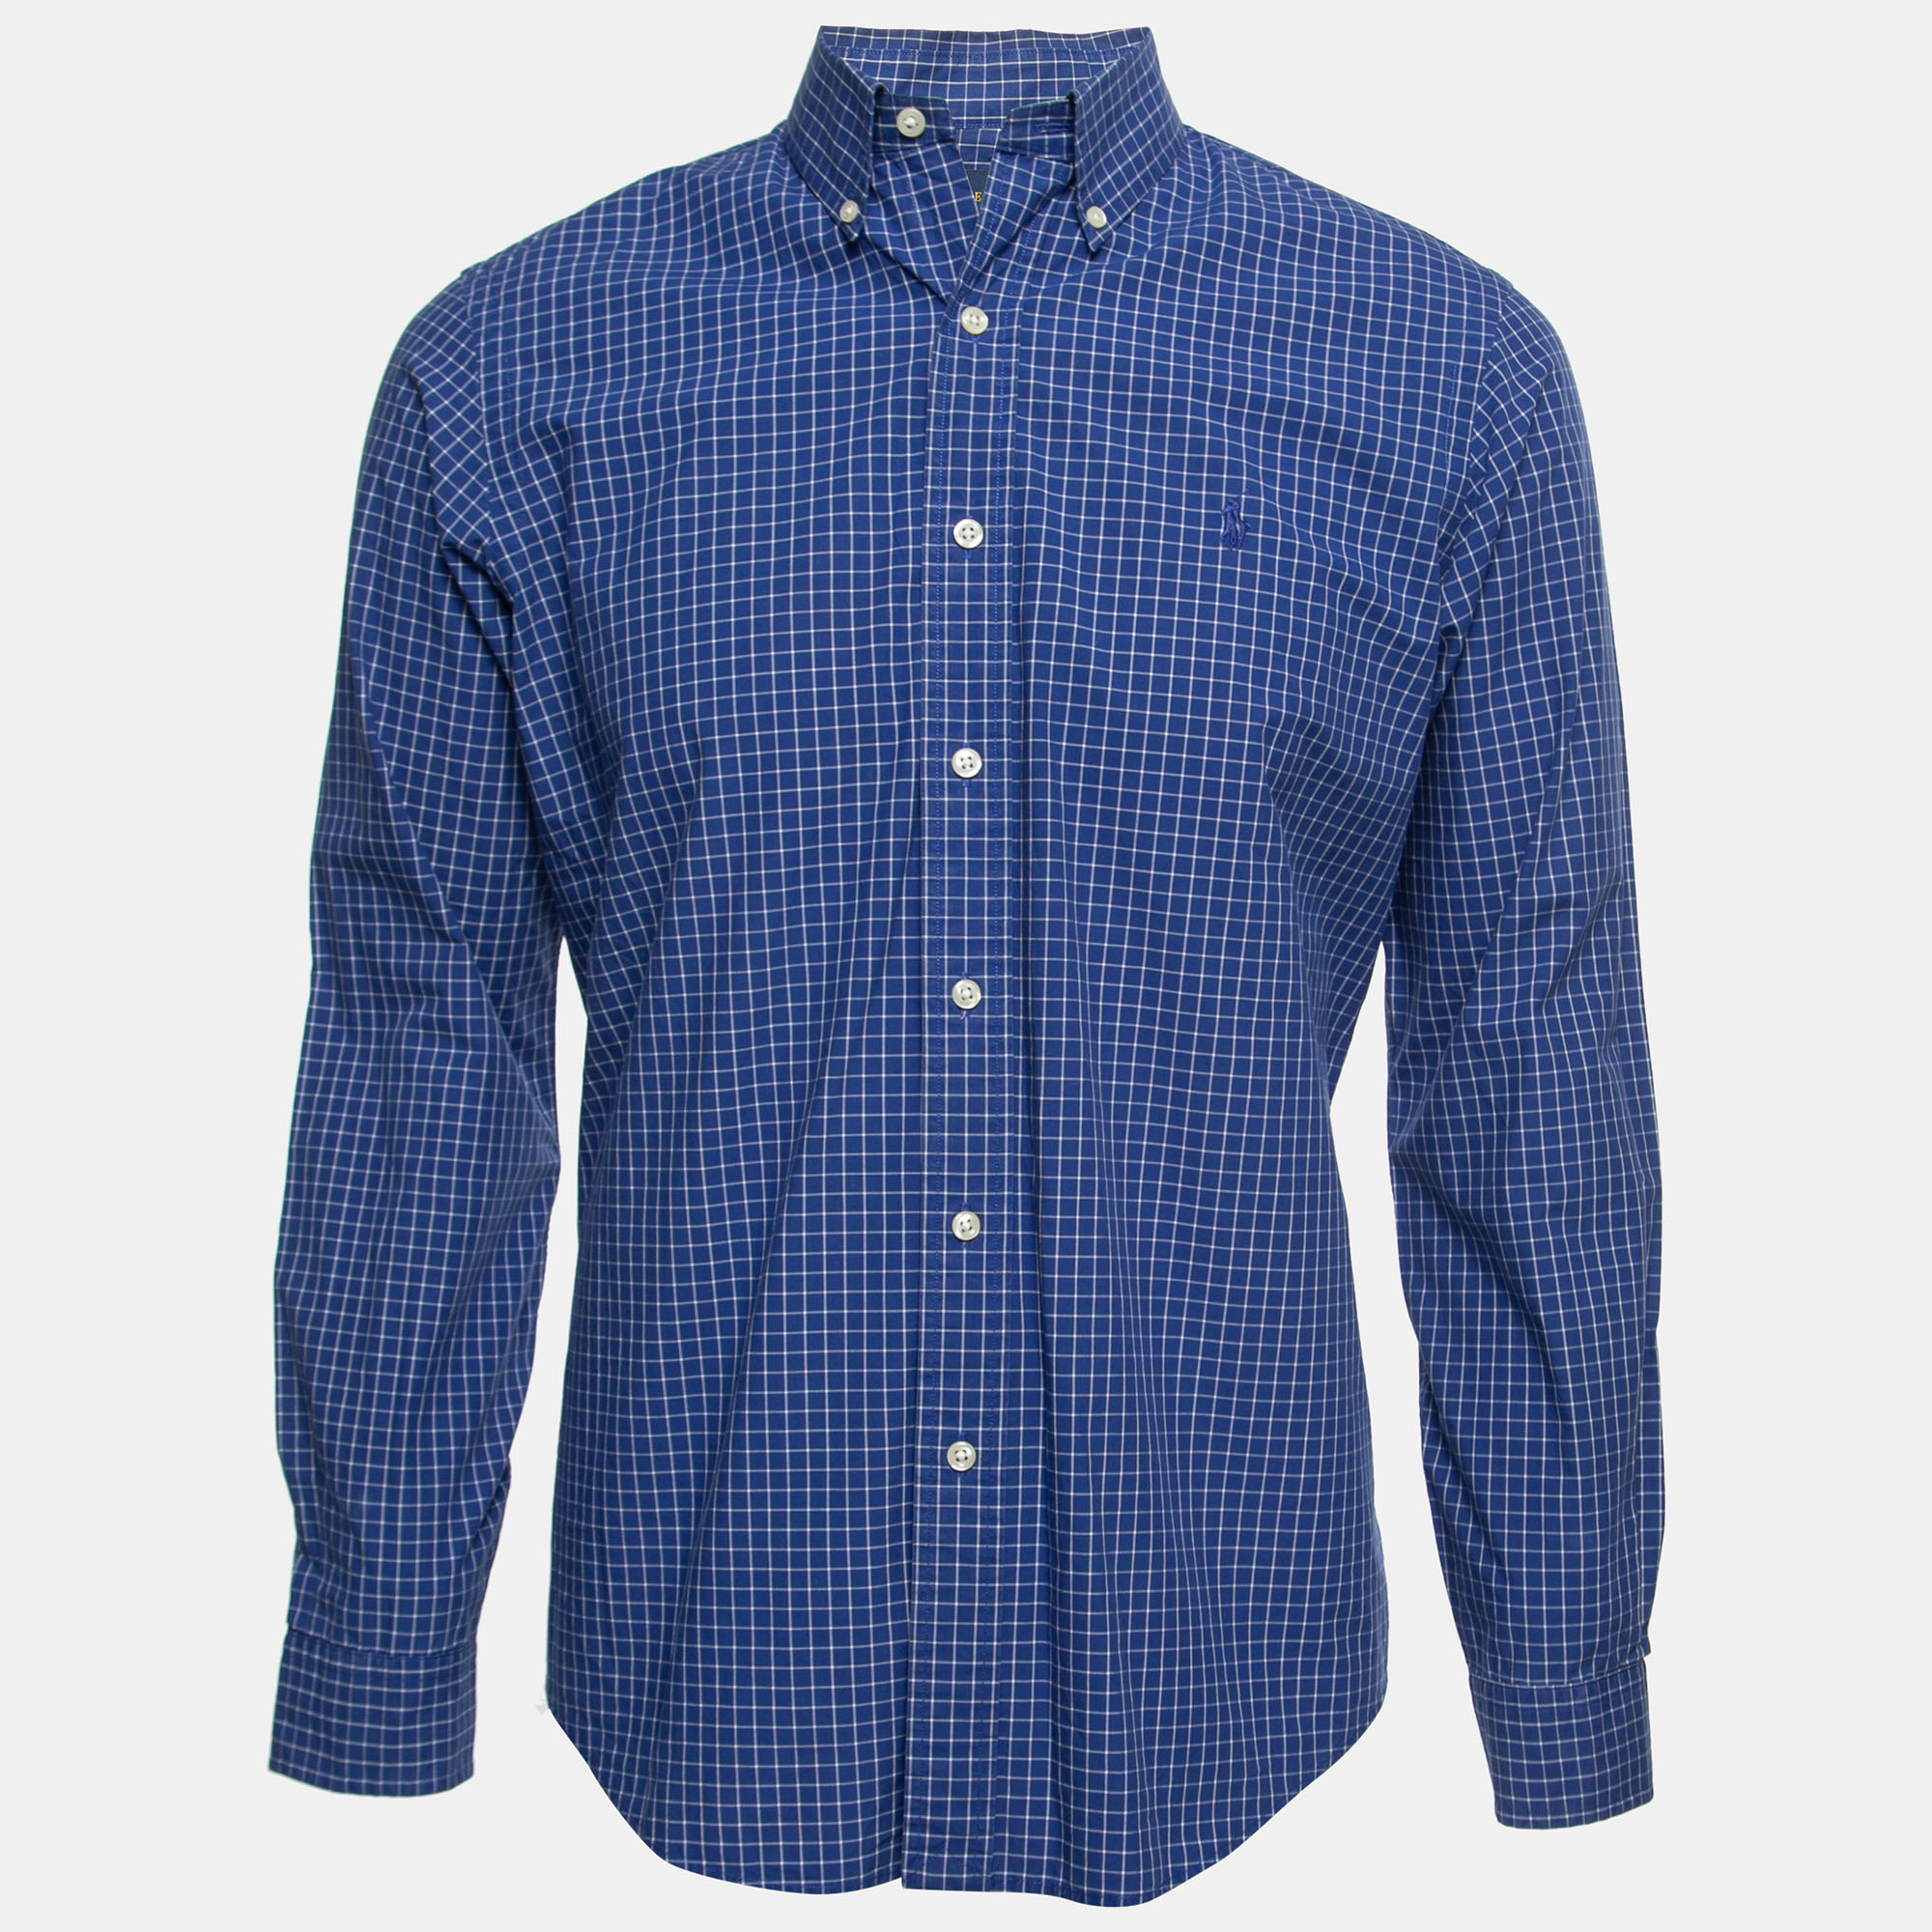 

Ralph Lauren Blue Checked Patterned Cotton Button Down Shirt